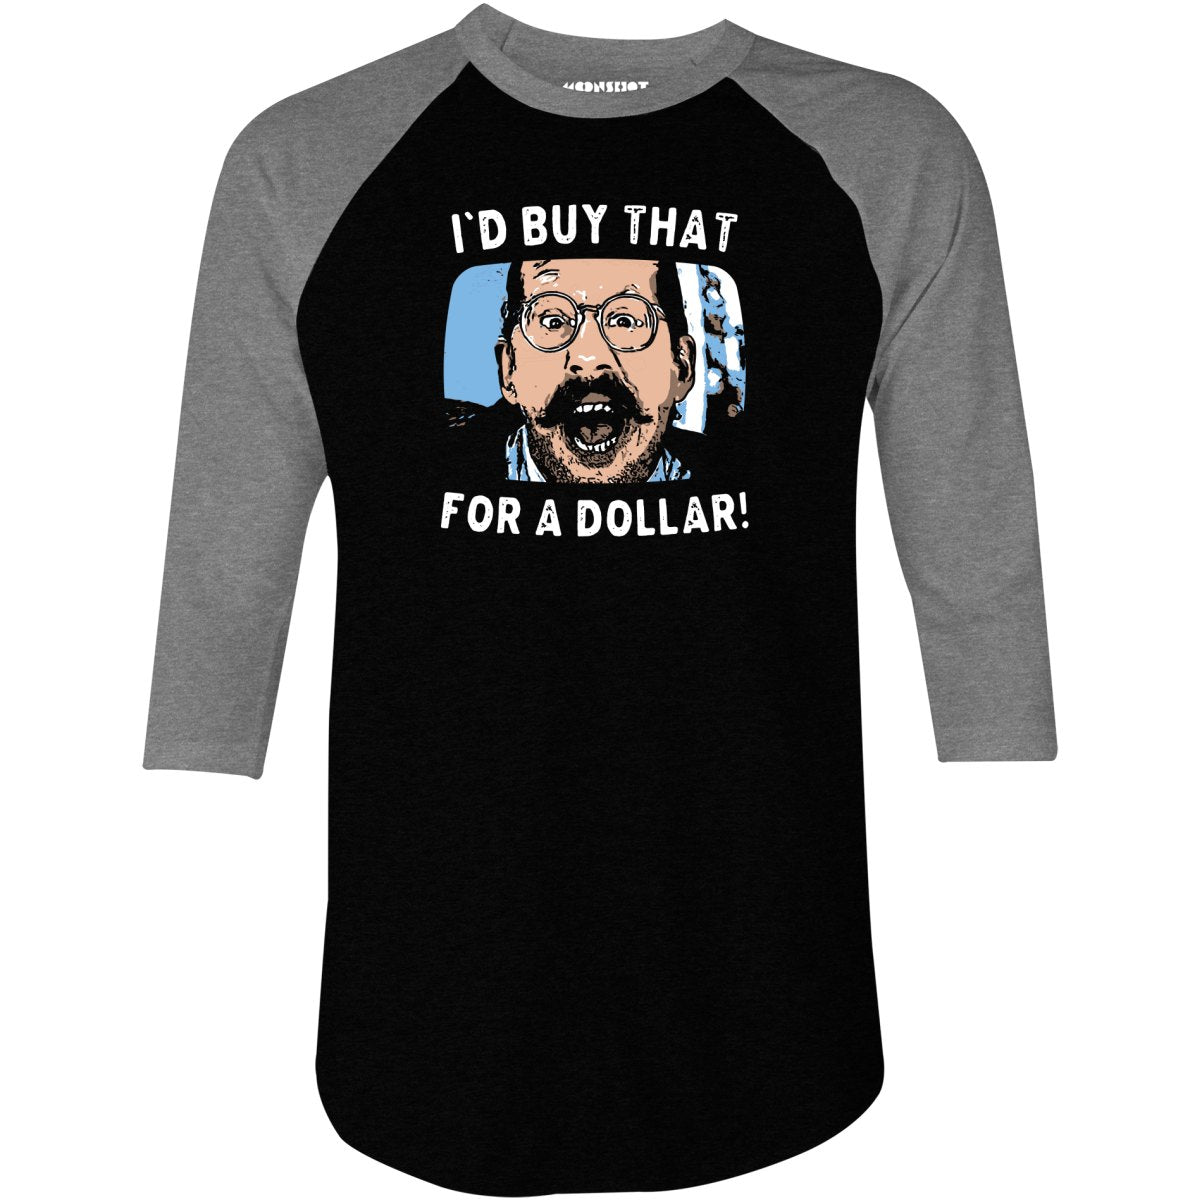 I'd Buy That For a Dollar - 3/4 Sleeve Raglan T-Shirt